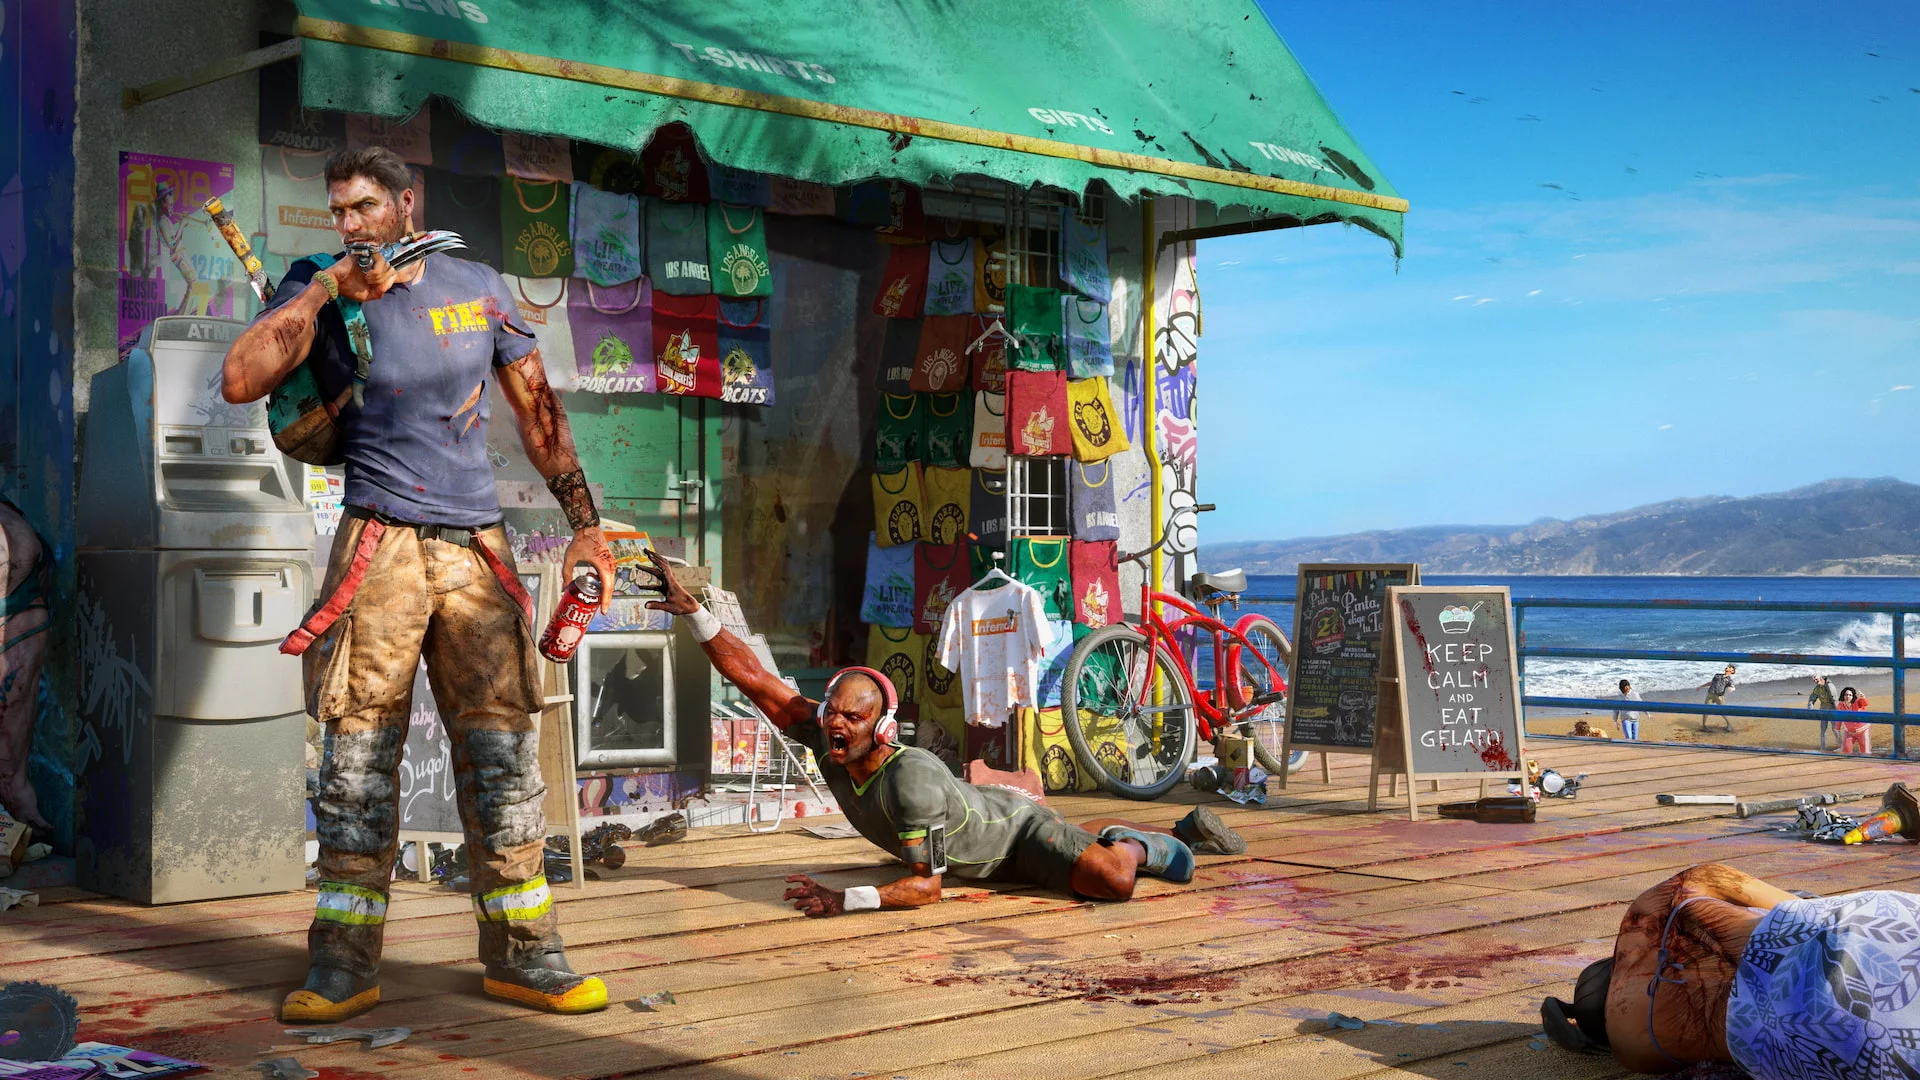 Full walkthrough of Dead Island 2 leaked online